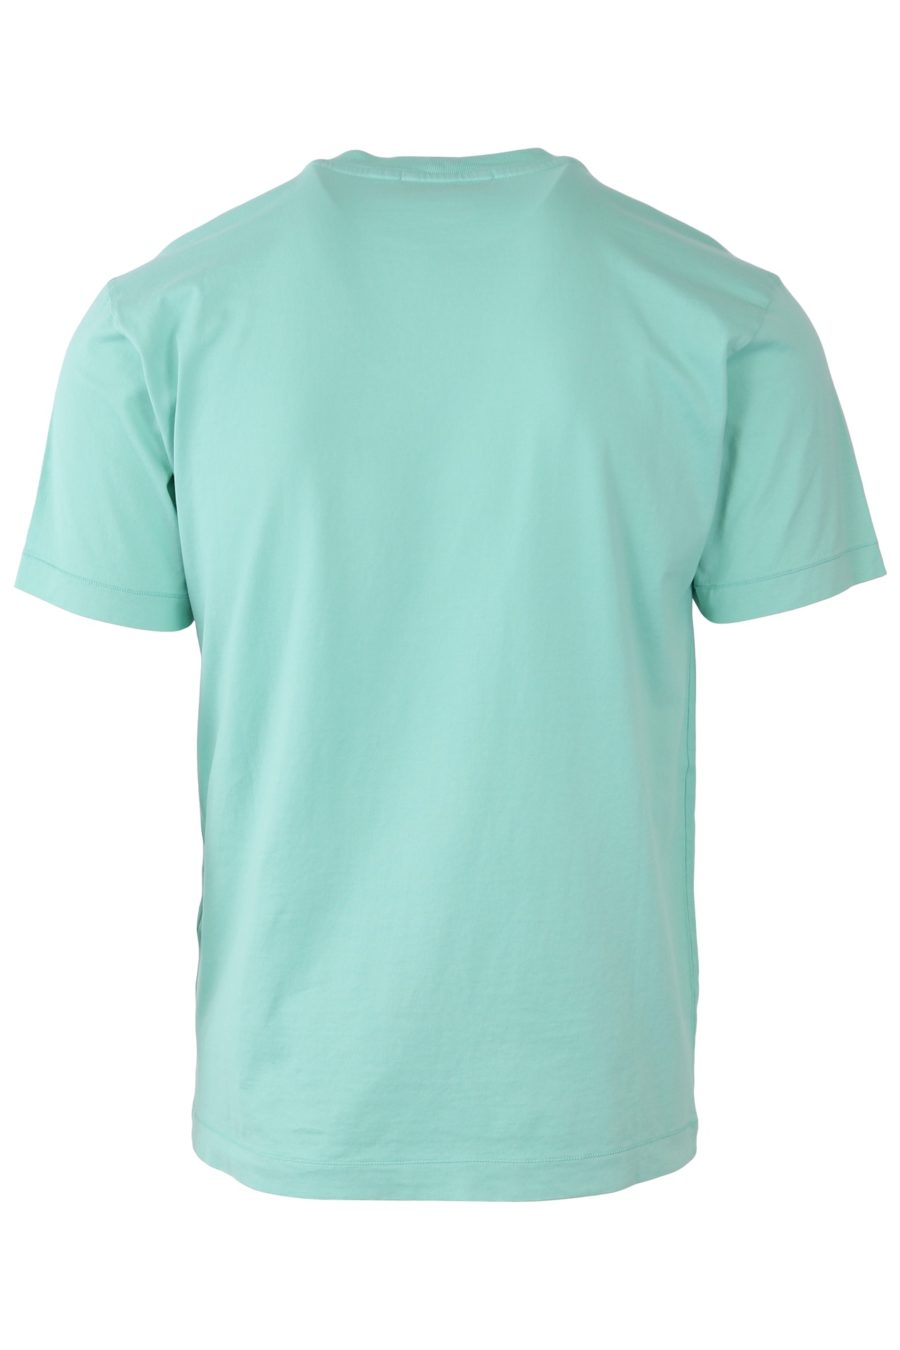 T-Shirt Stone Island mintfarben mit Logoaufnäher - edcd2b3f5a8a2da6533e49fa51dfcb2d9cd4b246